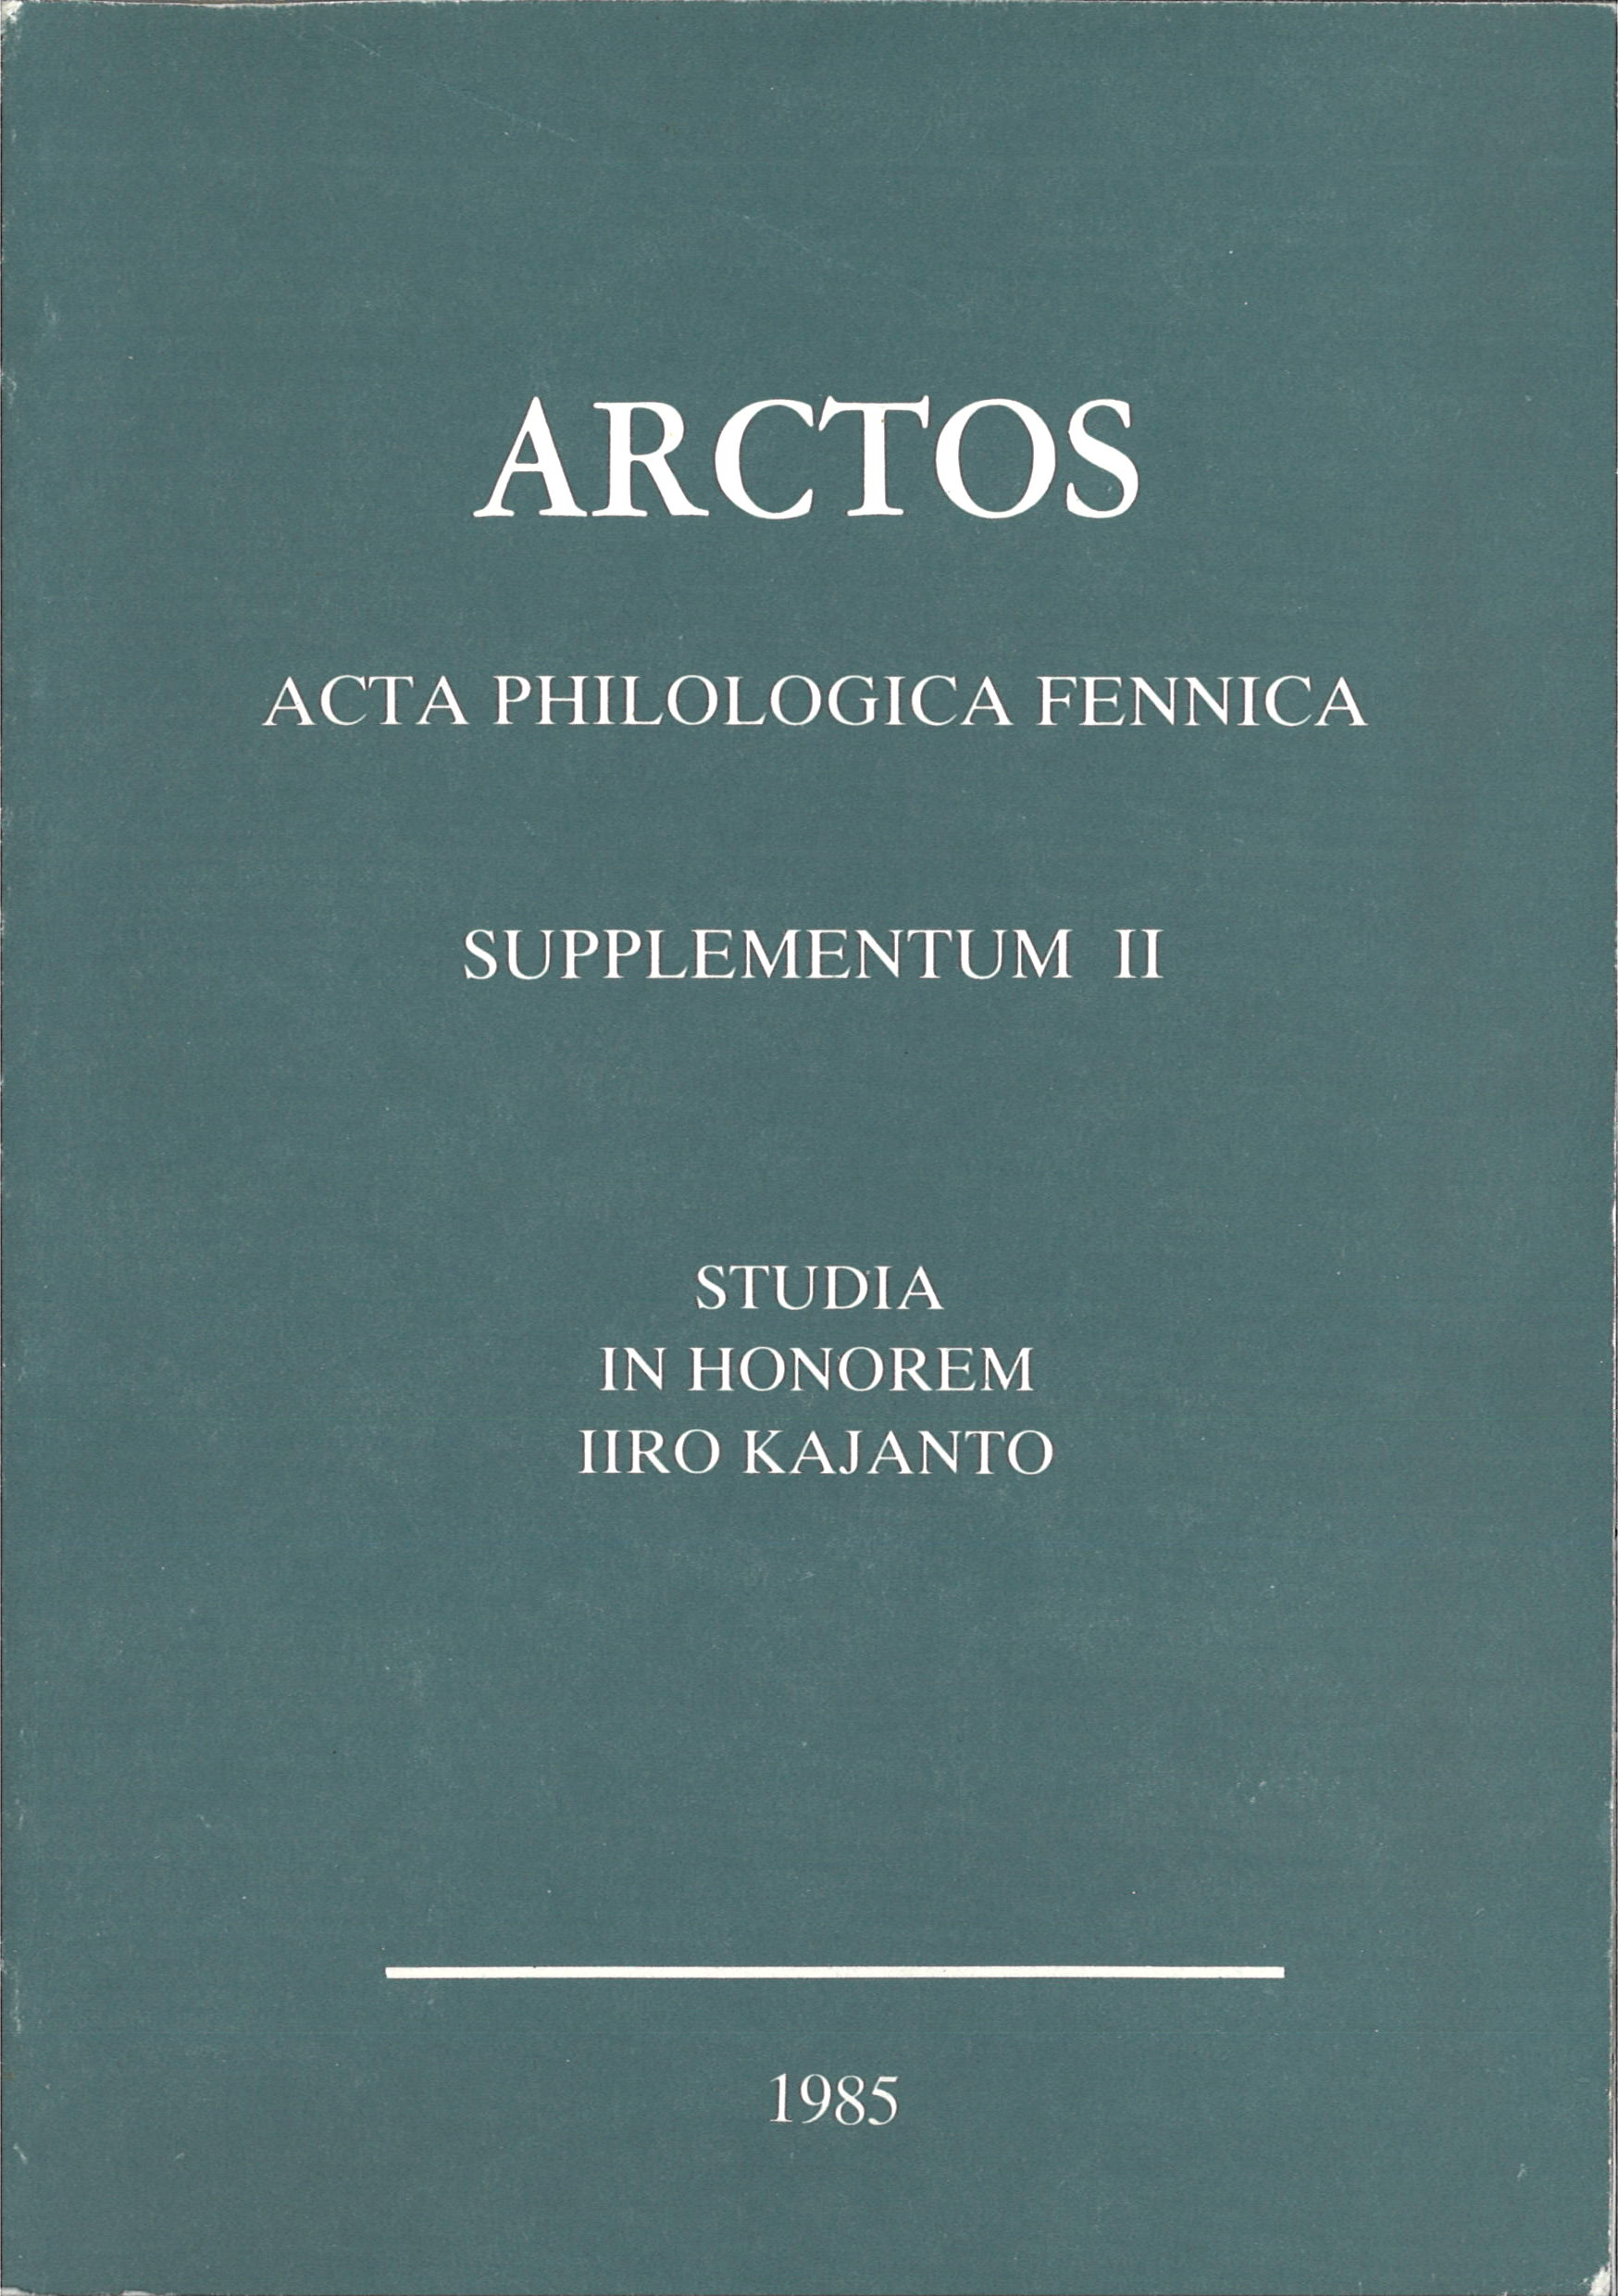 					View 1985: Supplementum II. Studia in honorem Iiro Kajanto
				